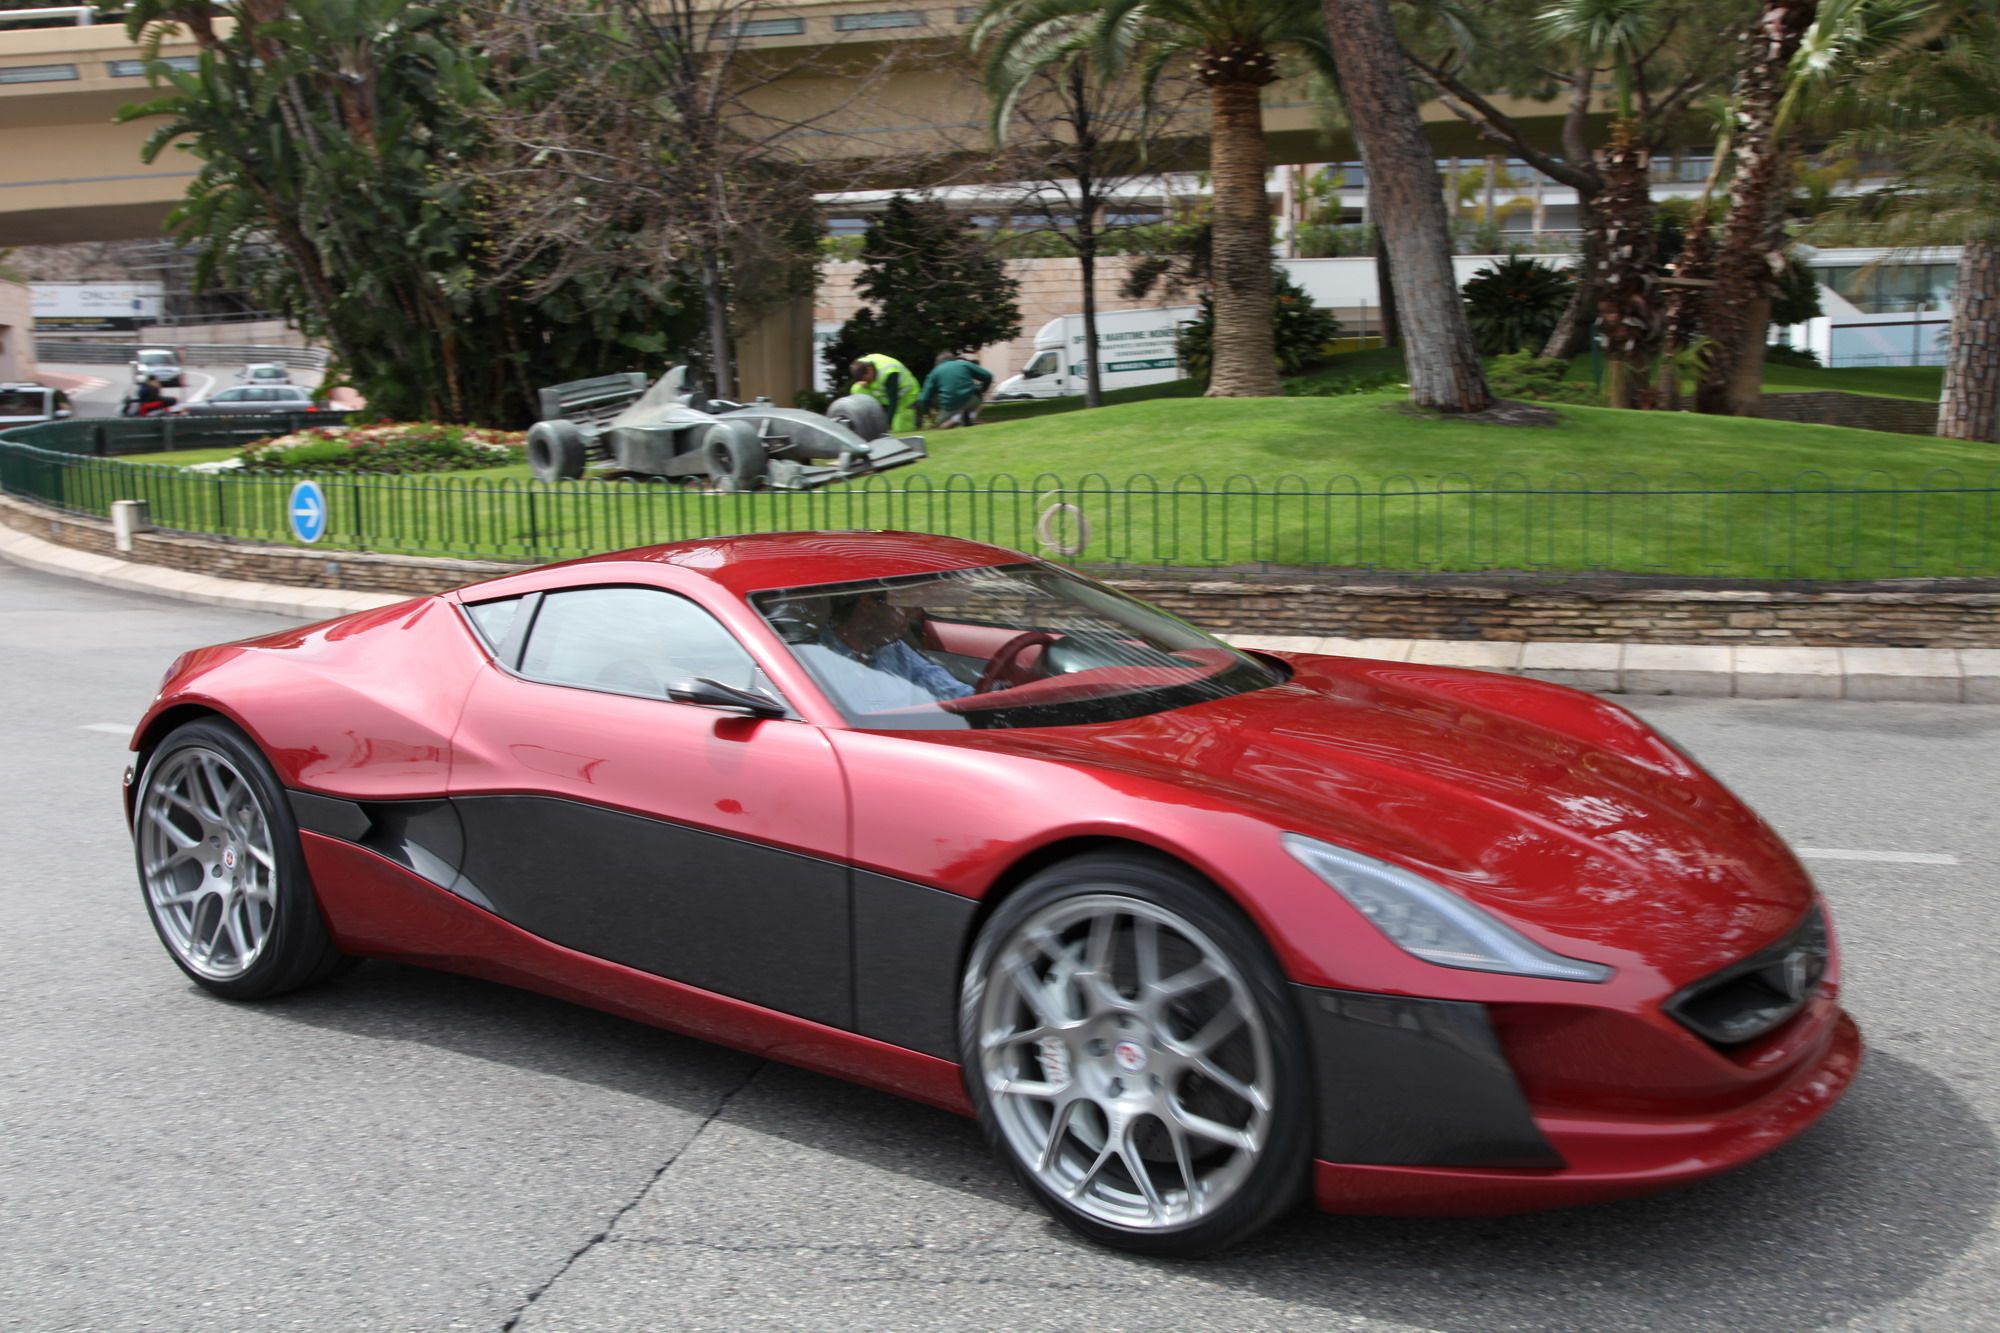  Rimac Concept One at Top Marques Monaco